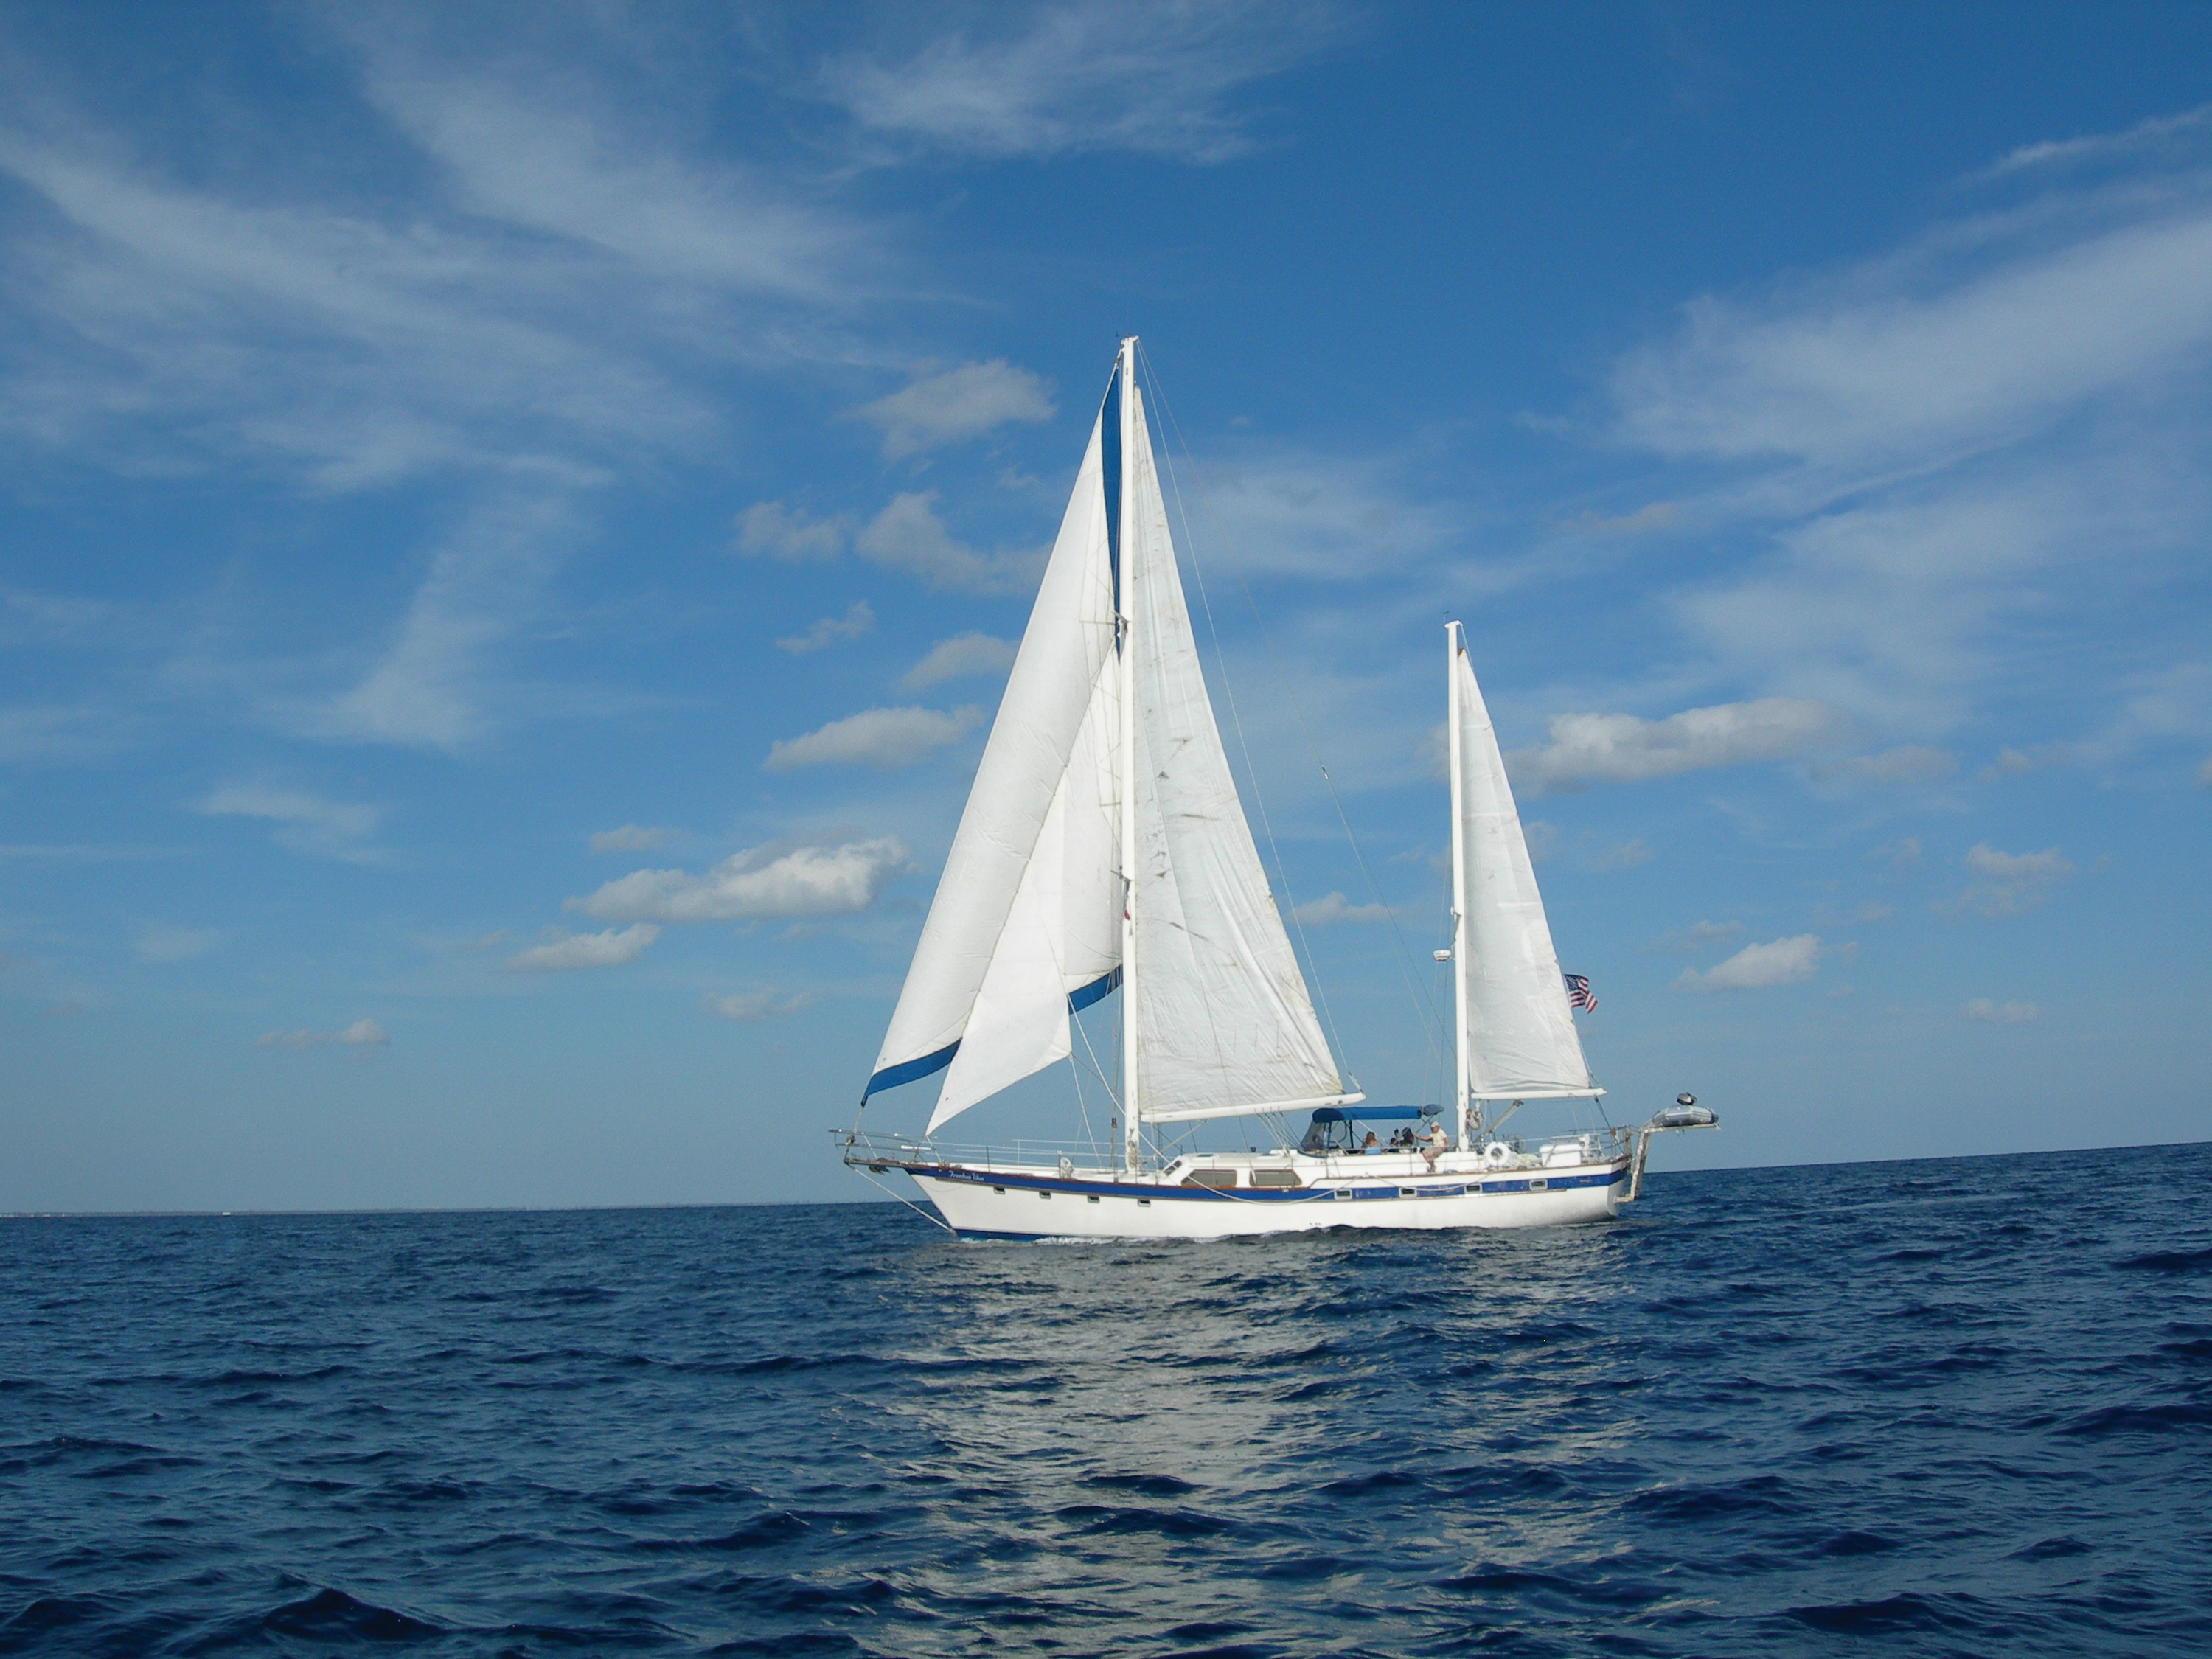 The sailboat photo